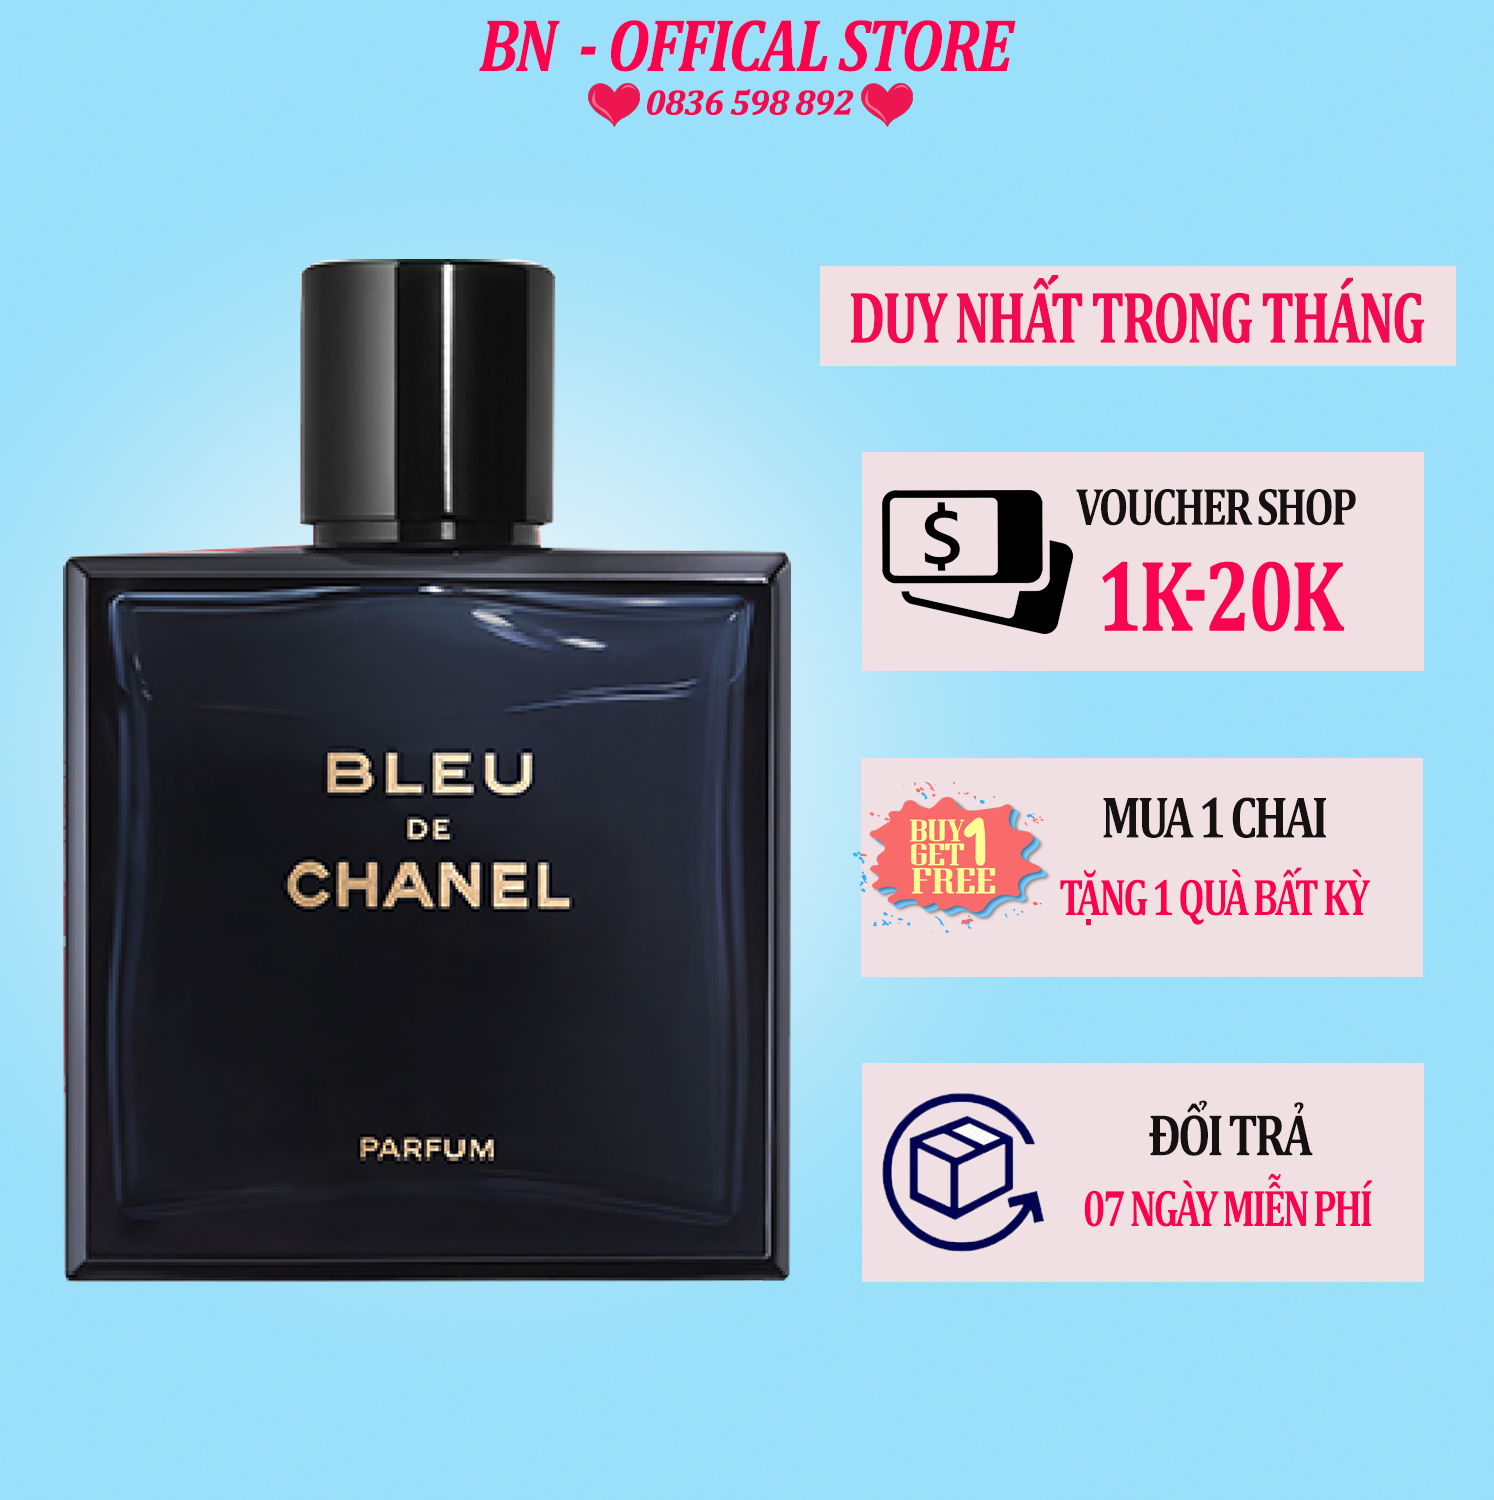 CHANEL  BLEU DE CHANEL Paris For Men Parfum  150 ml 5 fl oz  New in Box   eBay